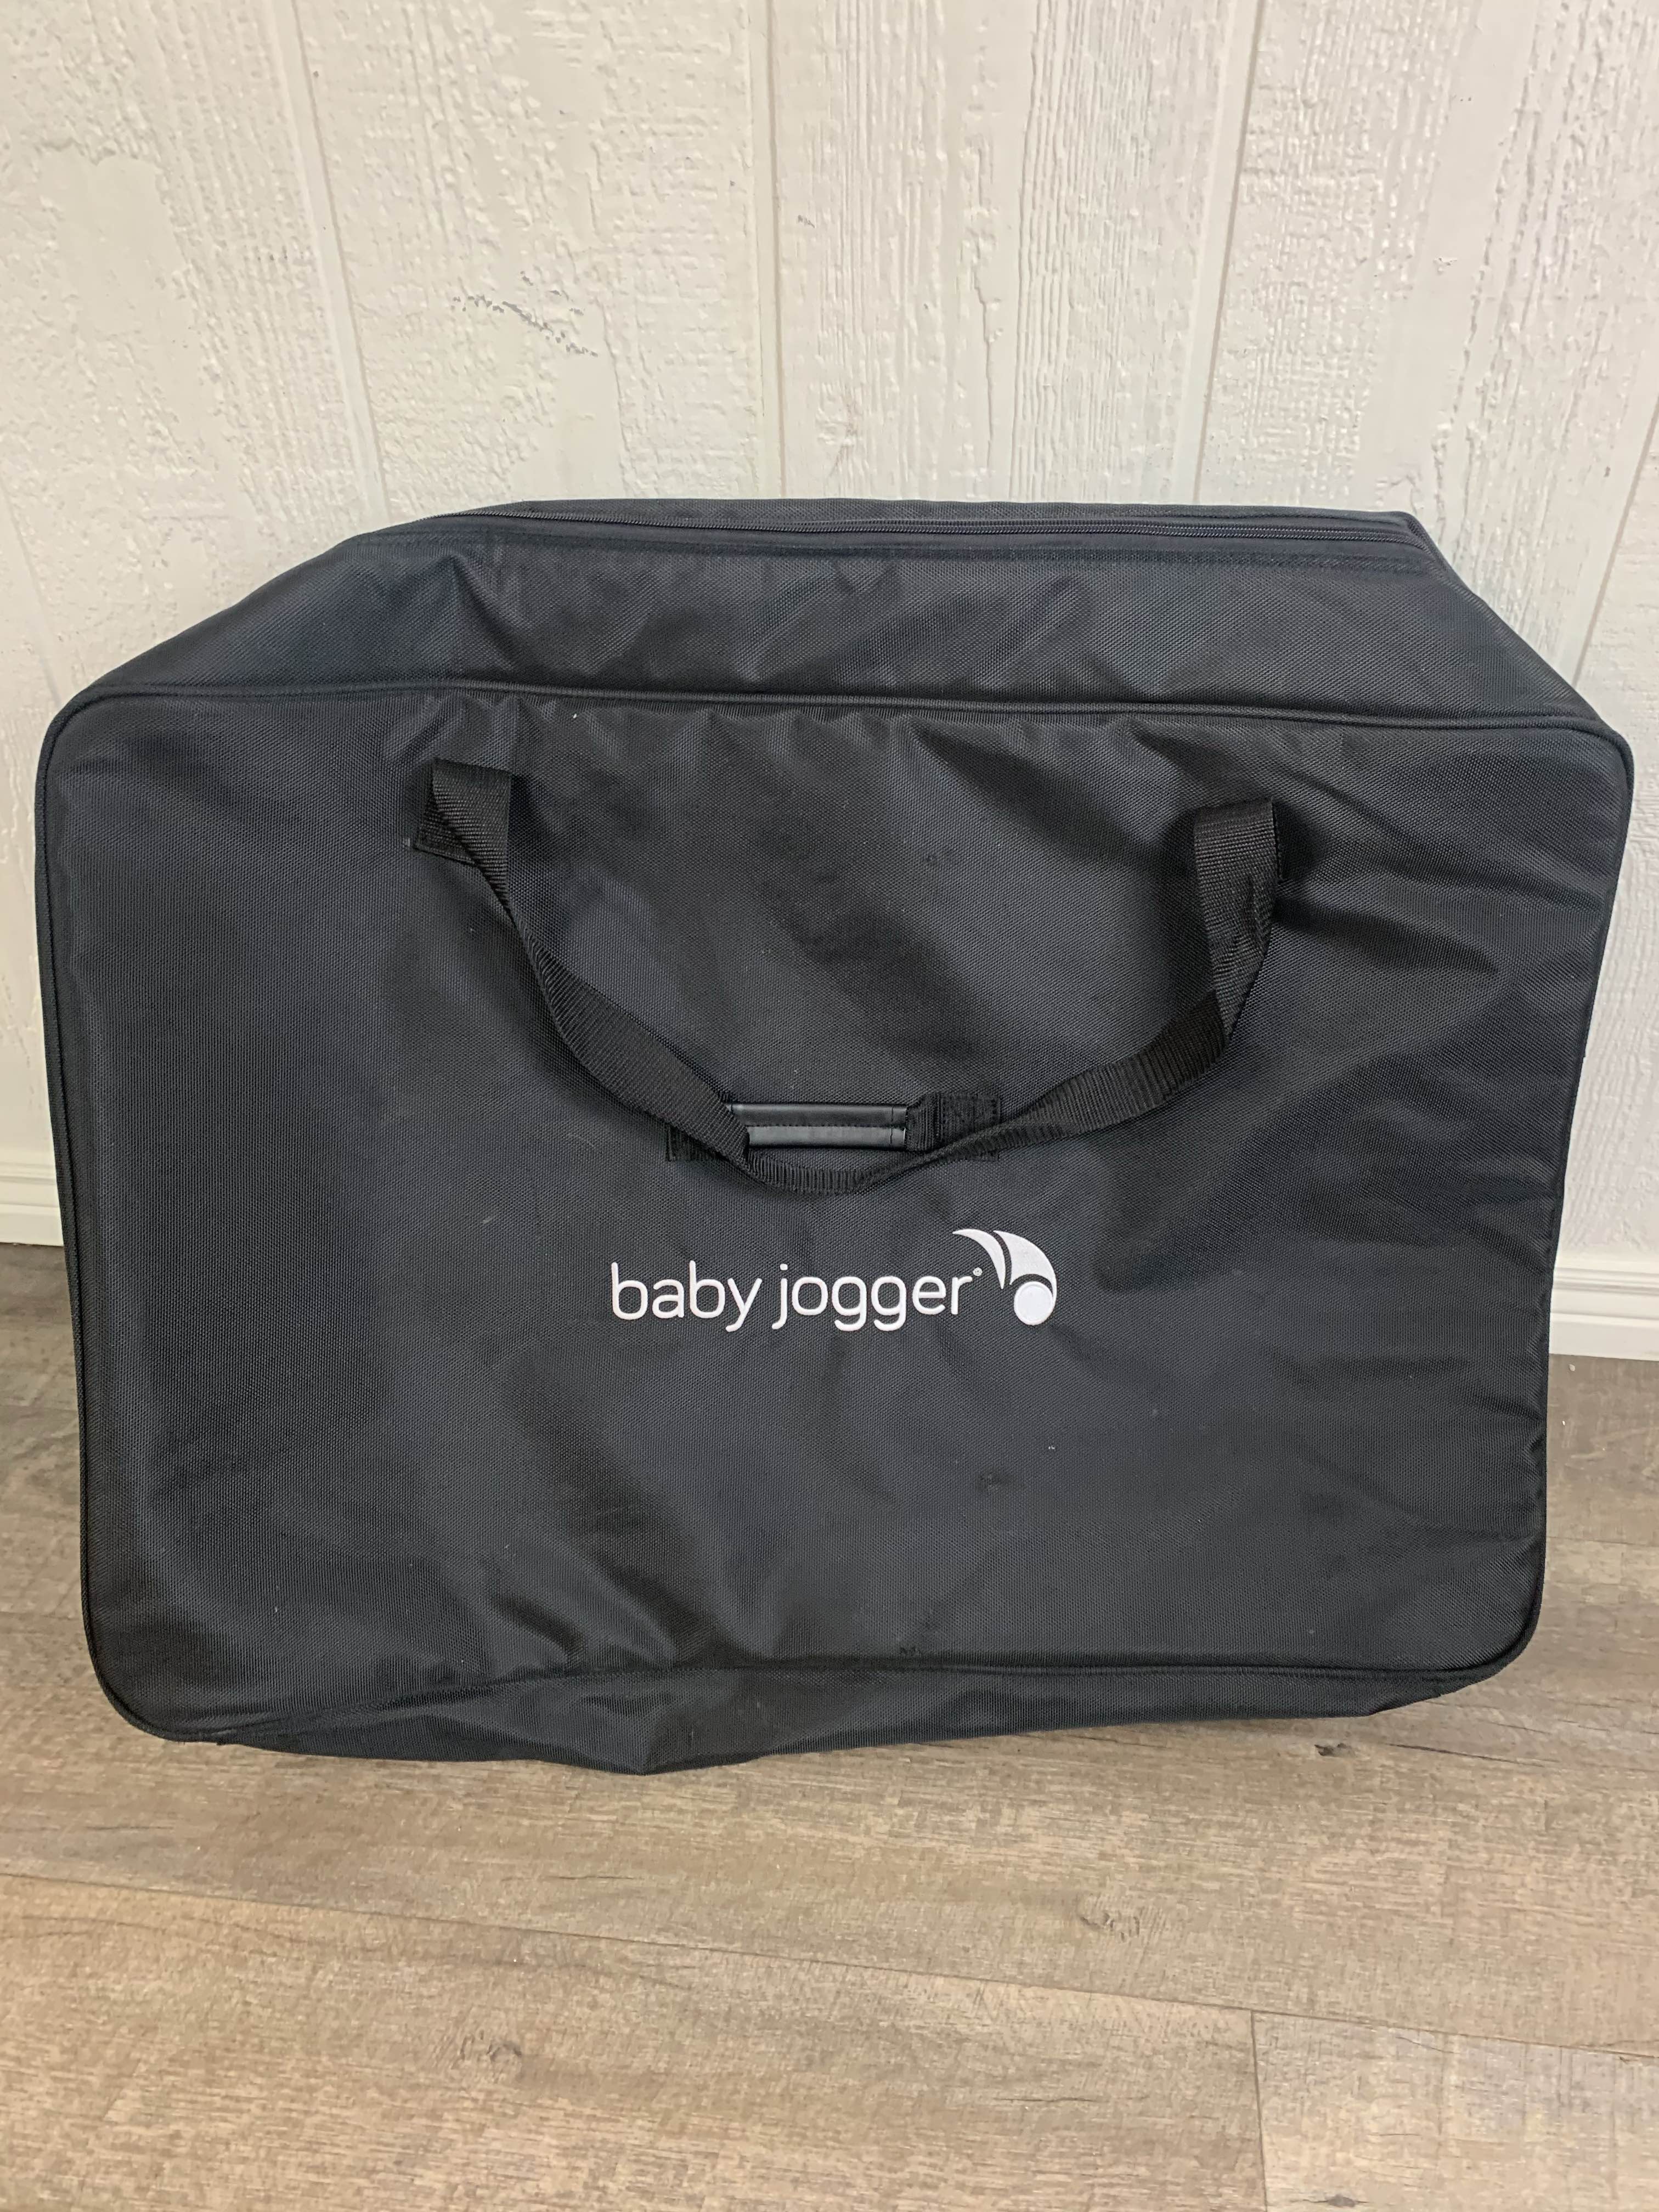 baby jogger city select travel bag